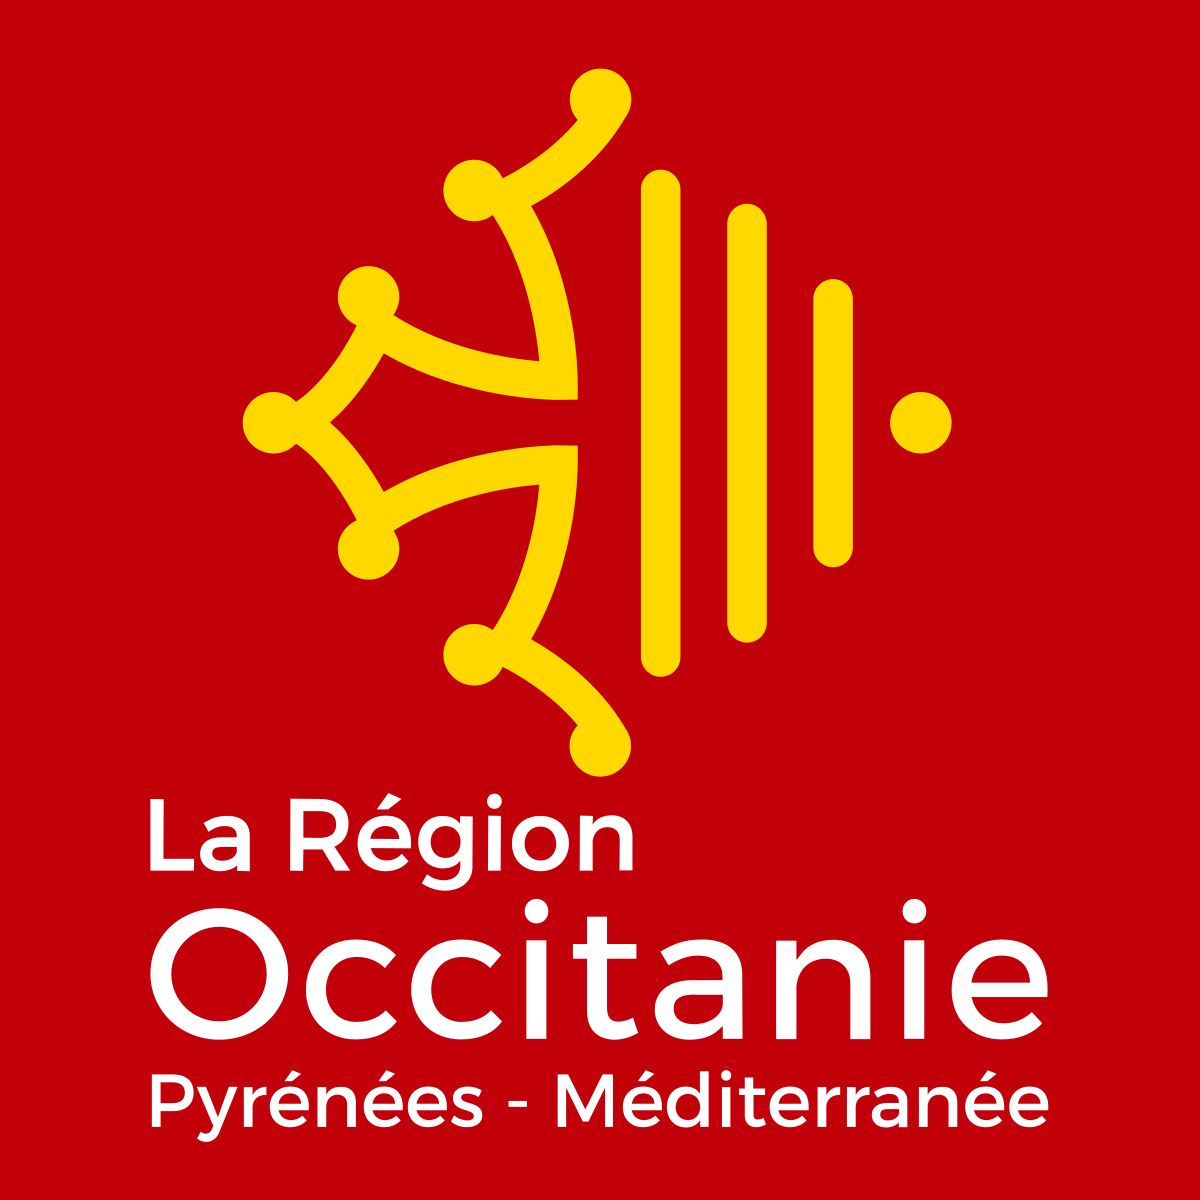 La Région Occitanie - Pyrénées Méditerranée